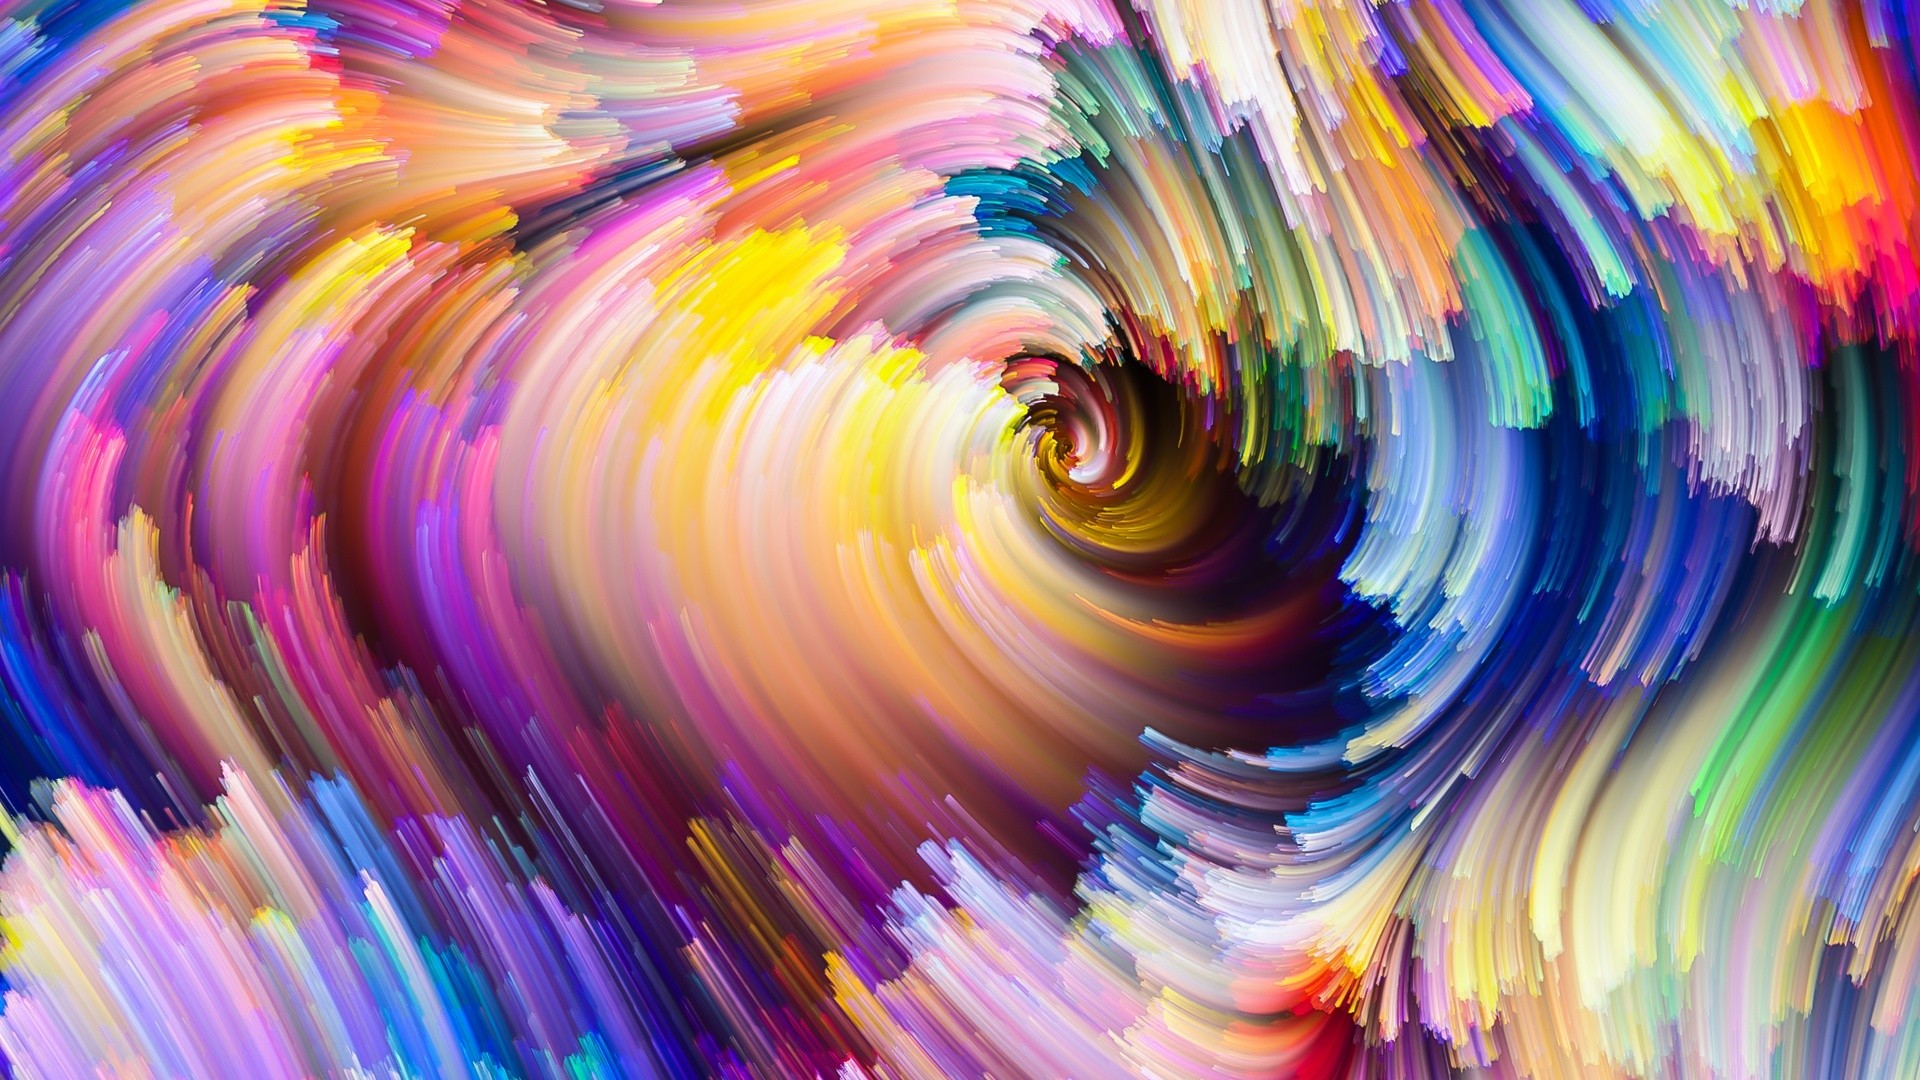 Abstract Colorful Digital Art Swirls CGi Spiral 1920x1080